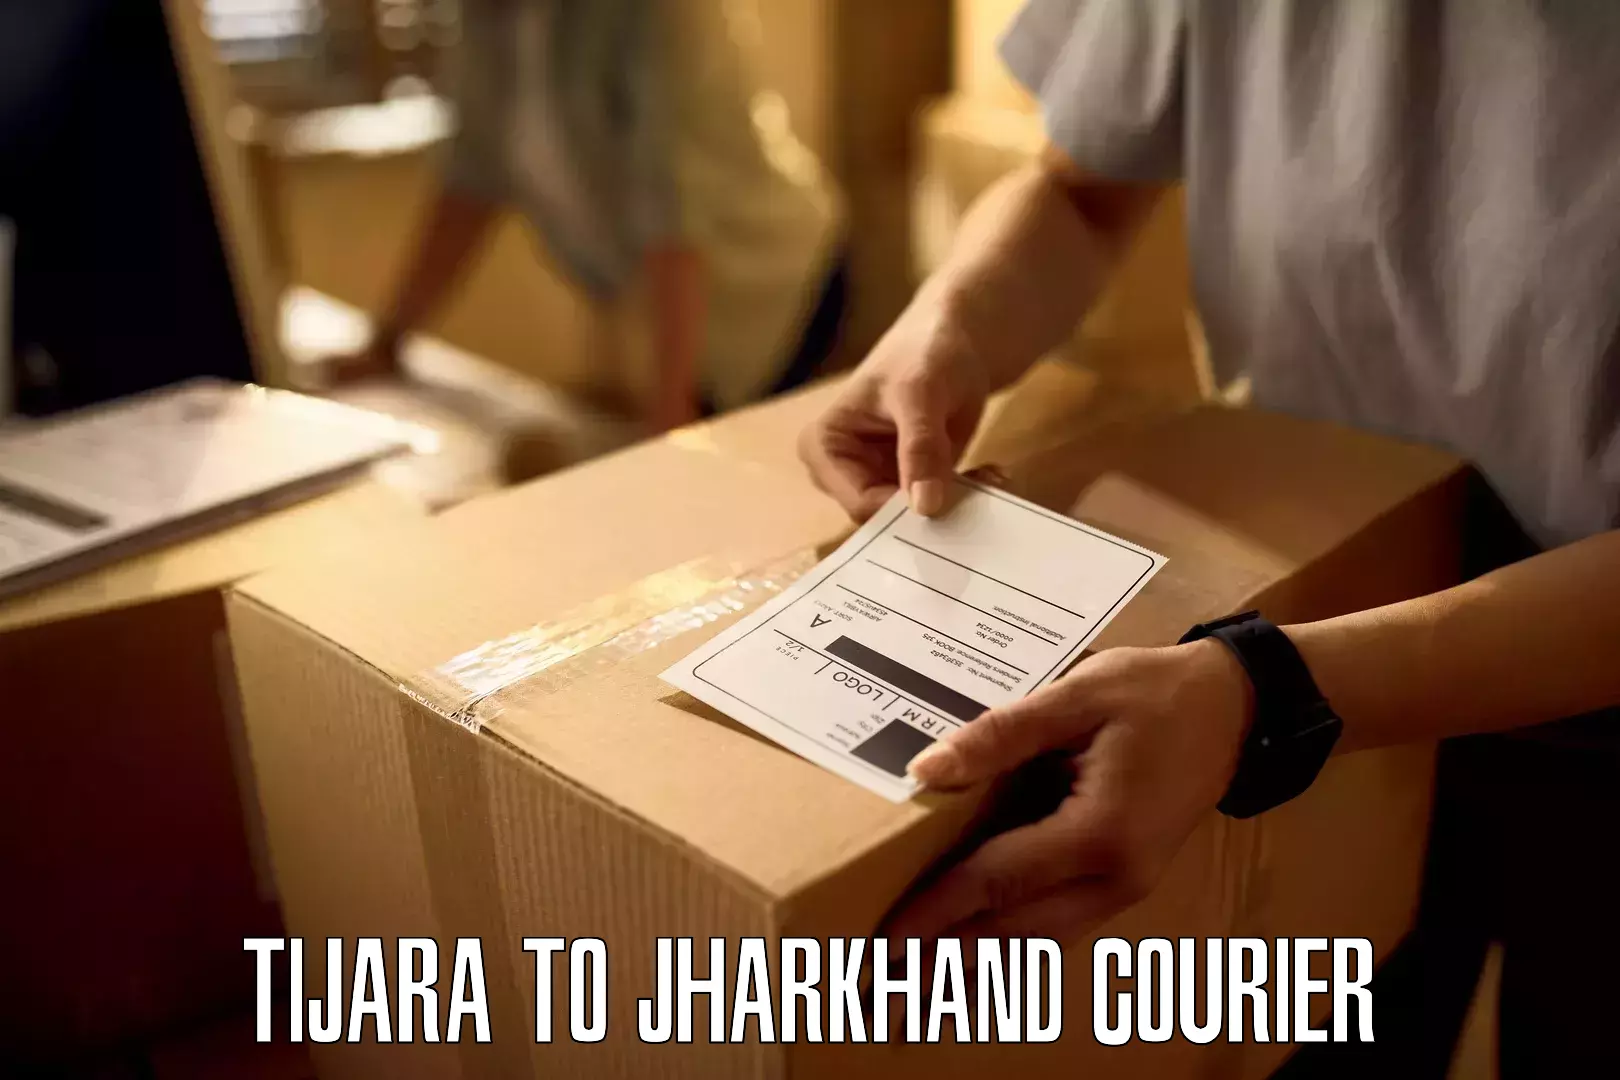 24/7 courier service Tijara to Chouparan